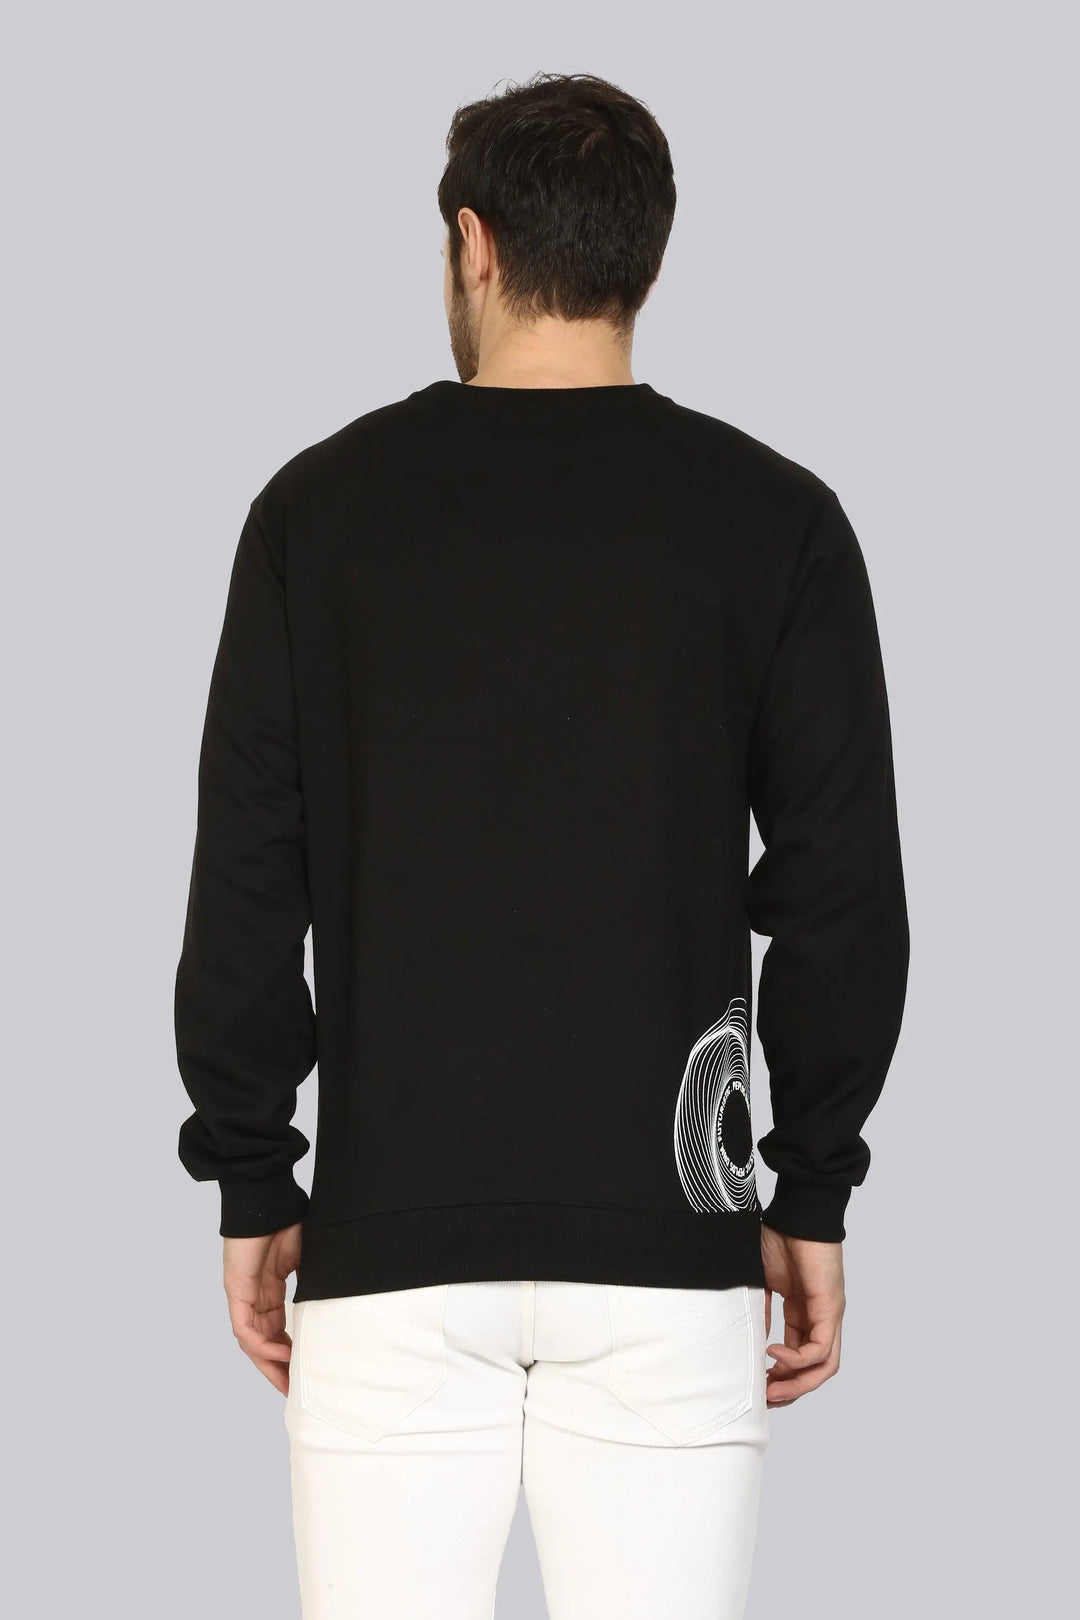 Round Neck Black Full Sleeve Premium Sweatshirt for Men - Peplos Jeans 